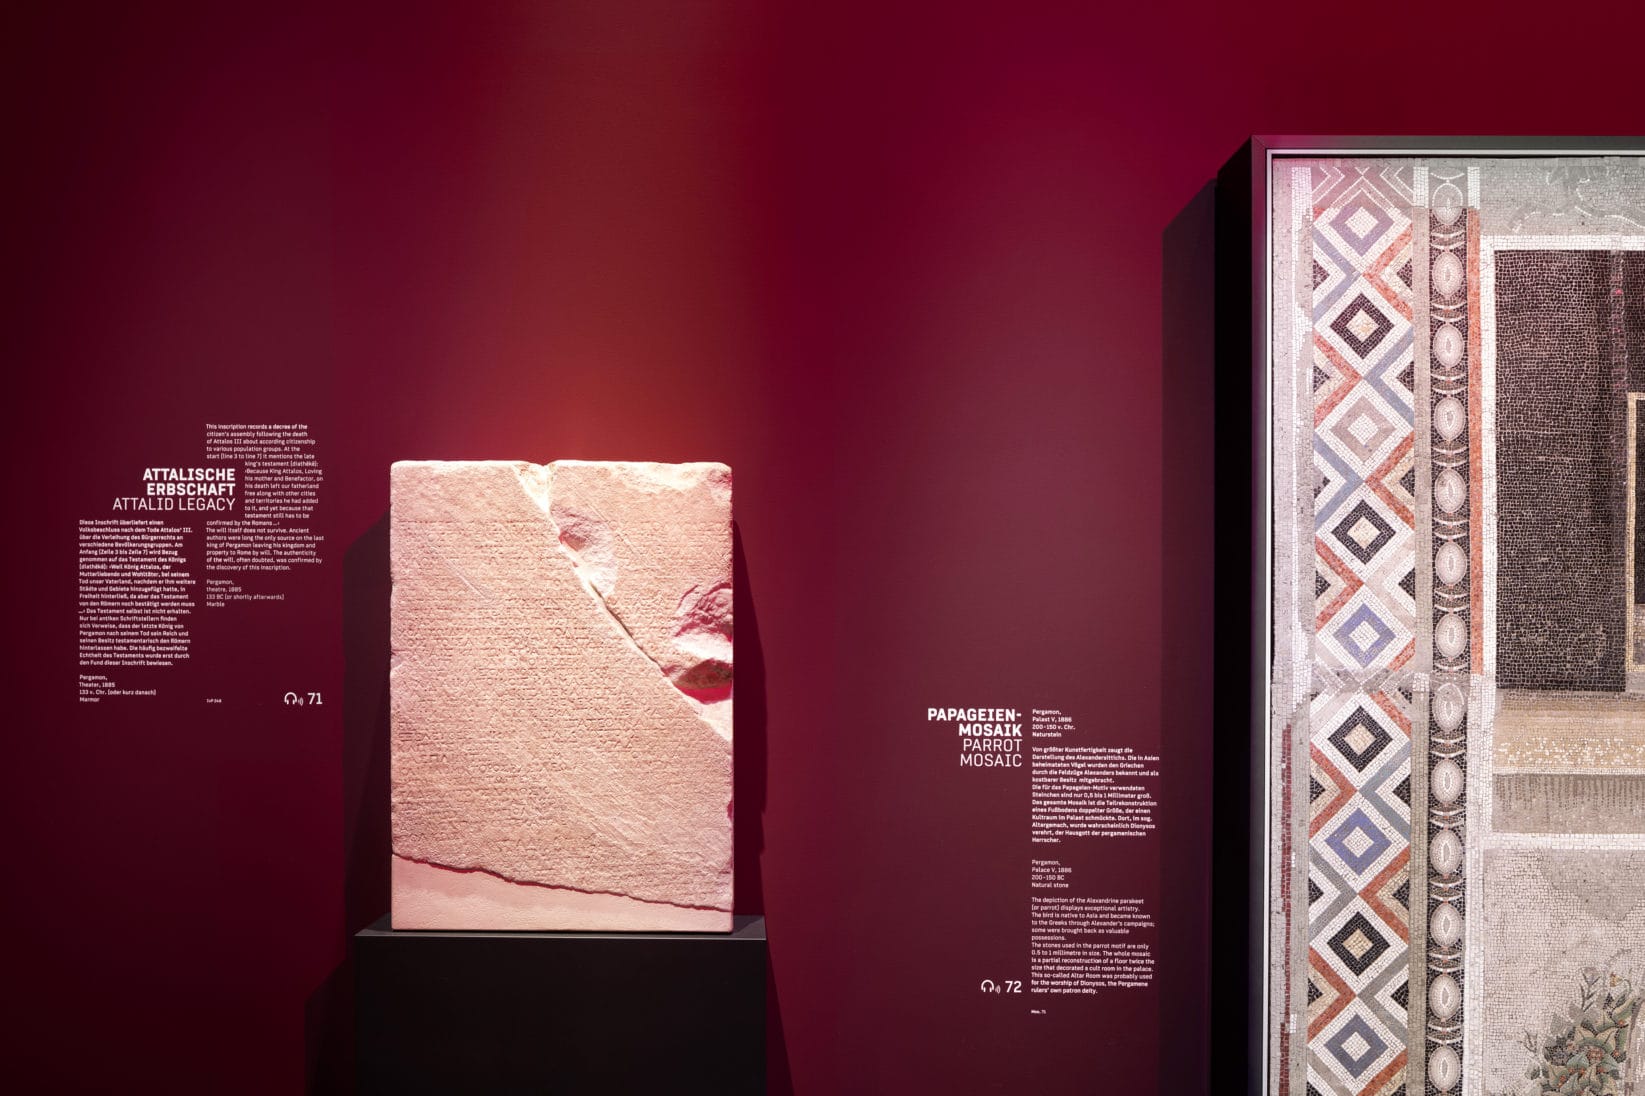 Museumsinsel Berlin Pergamon Ausstellung Panorama Wandgrafik Typografie Beschreibungstext